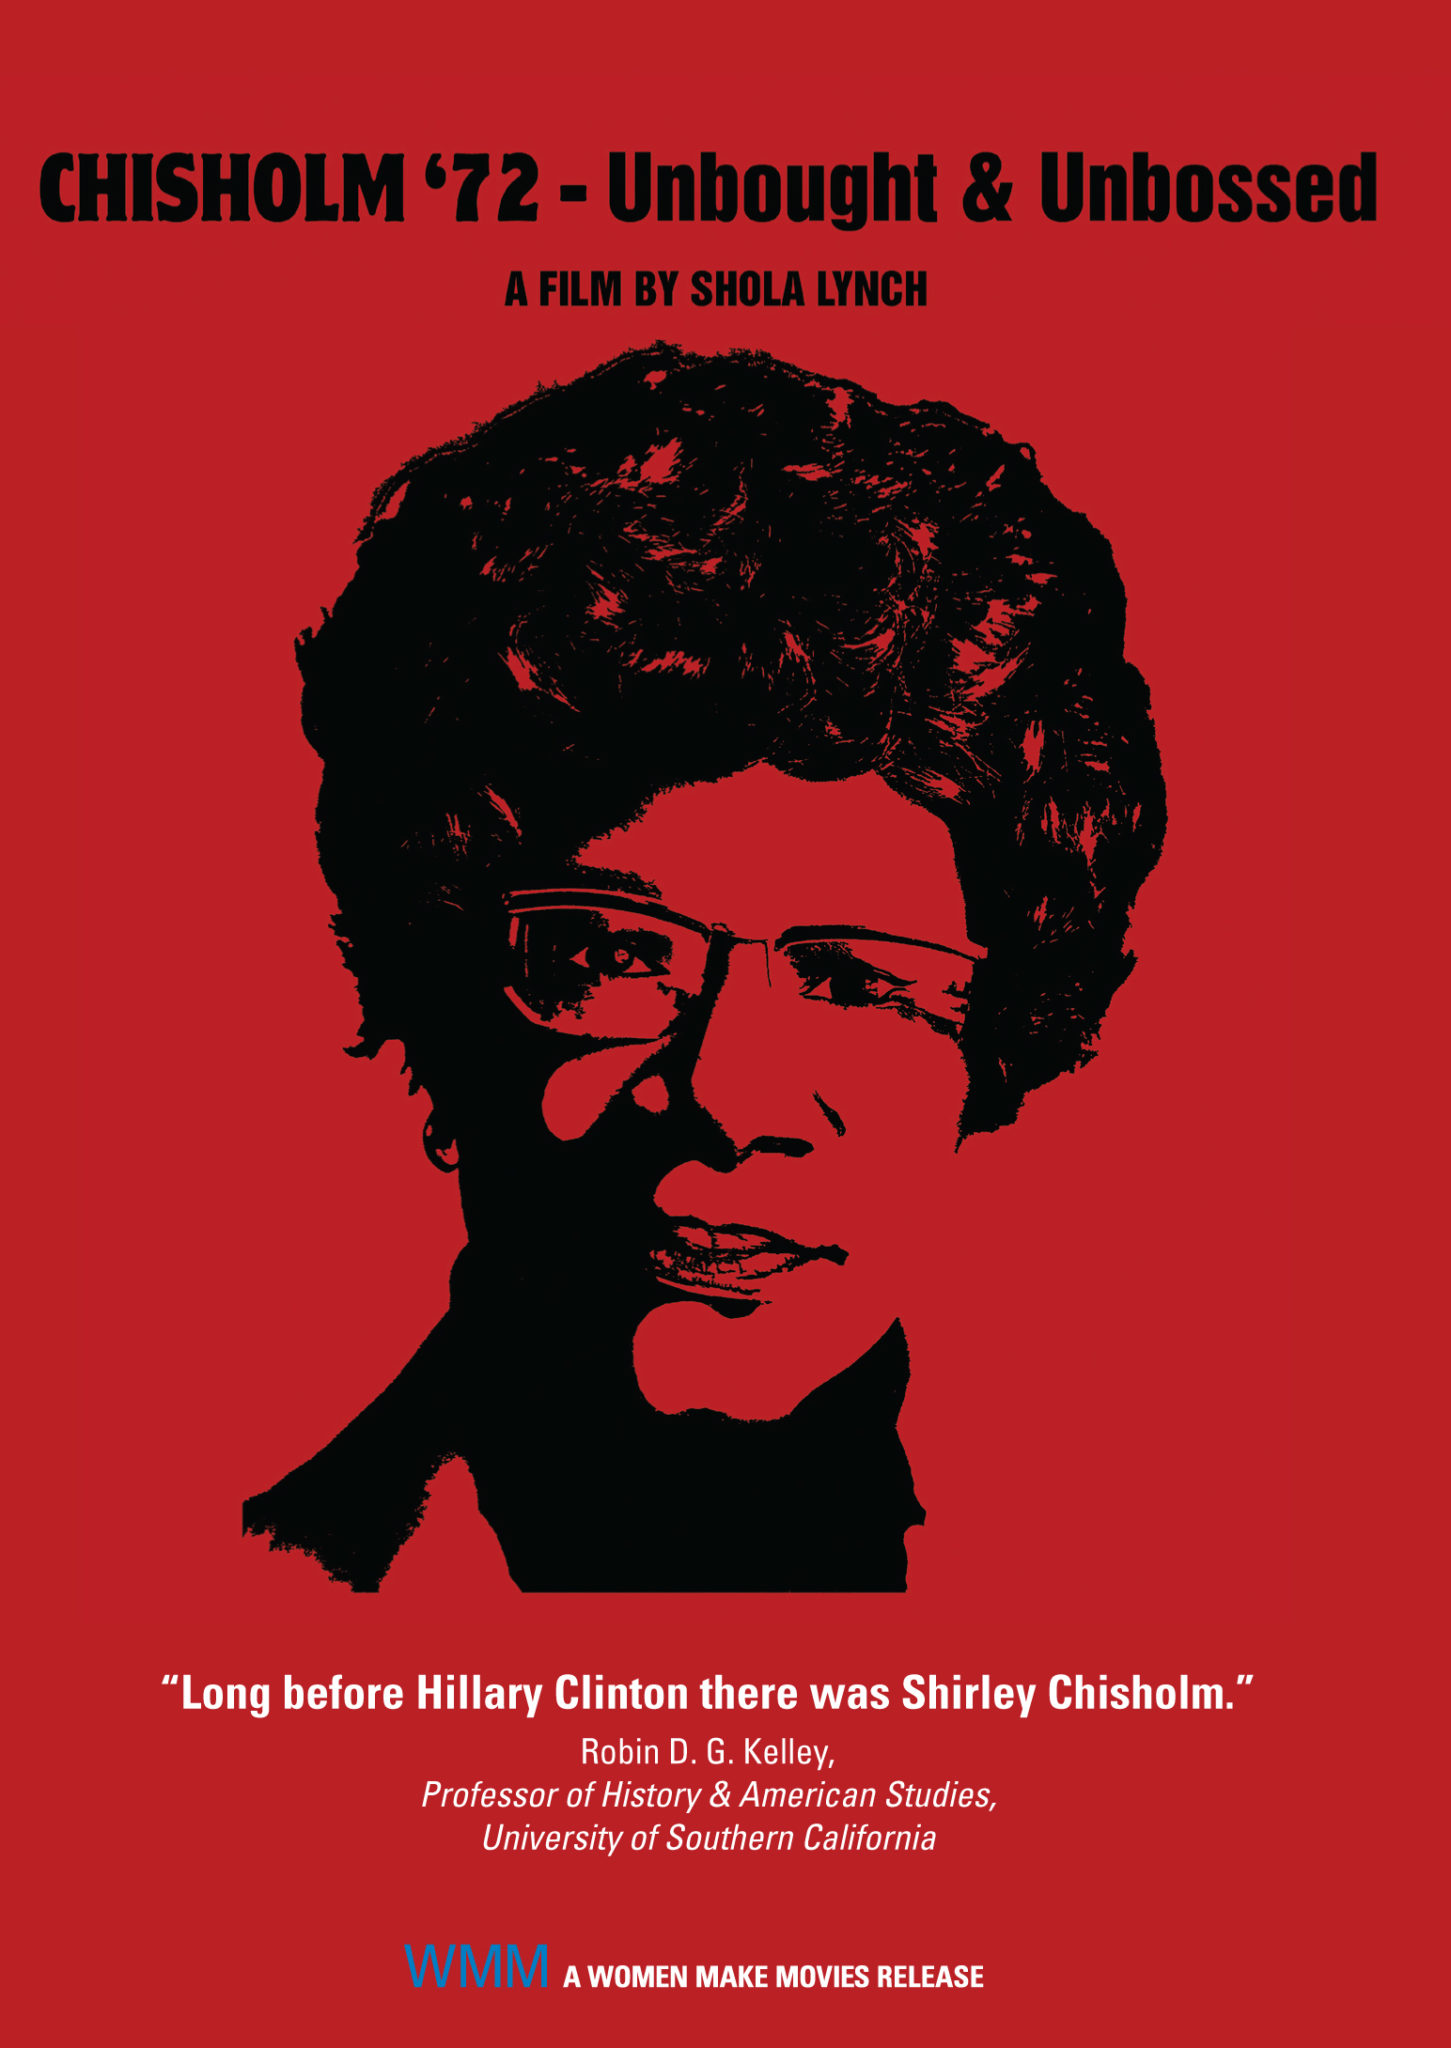 Chisholm '72 DVD cover